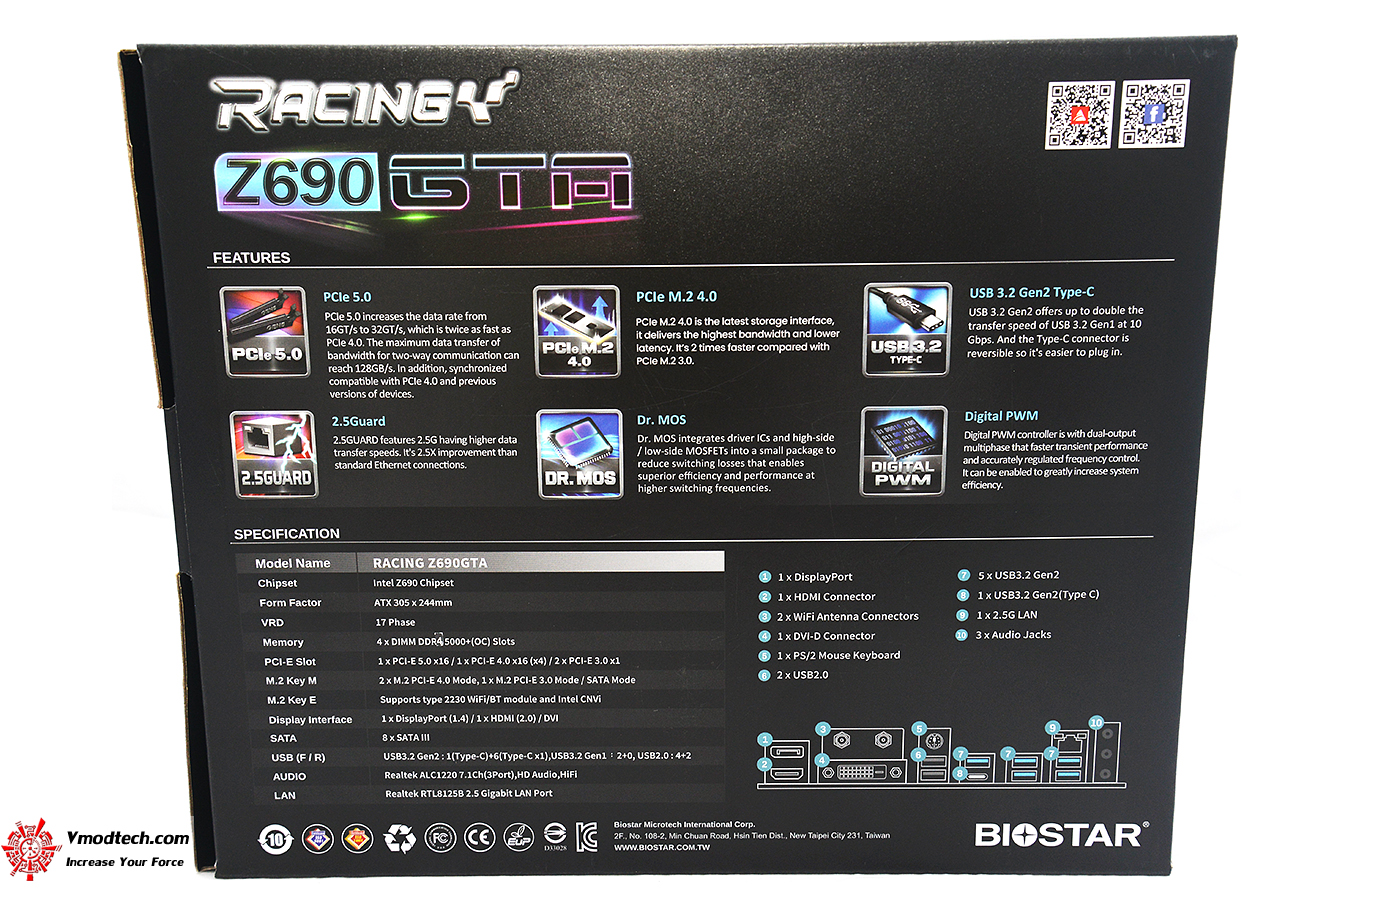 dsc 8970 BIOSTAR RACING Z690 GTA REVIEW